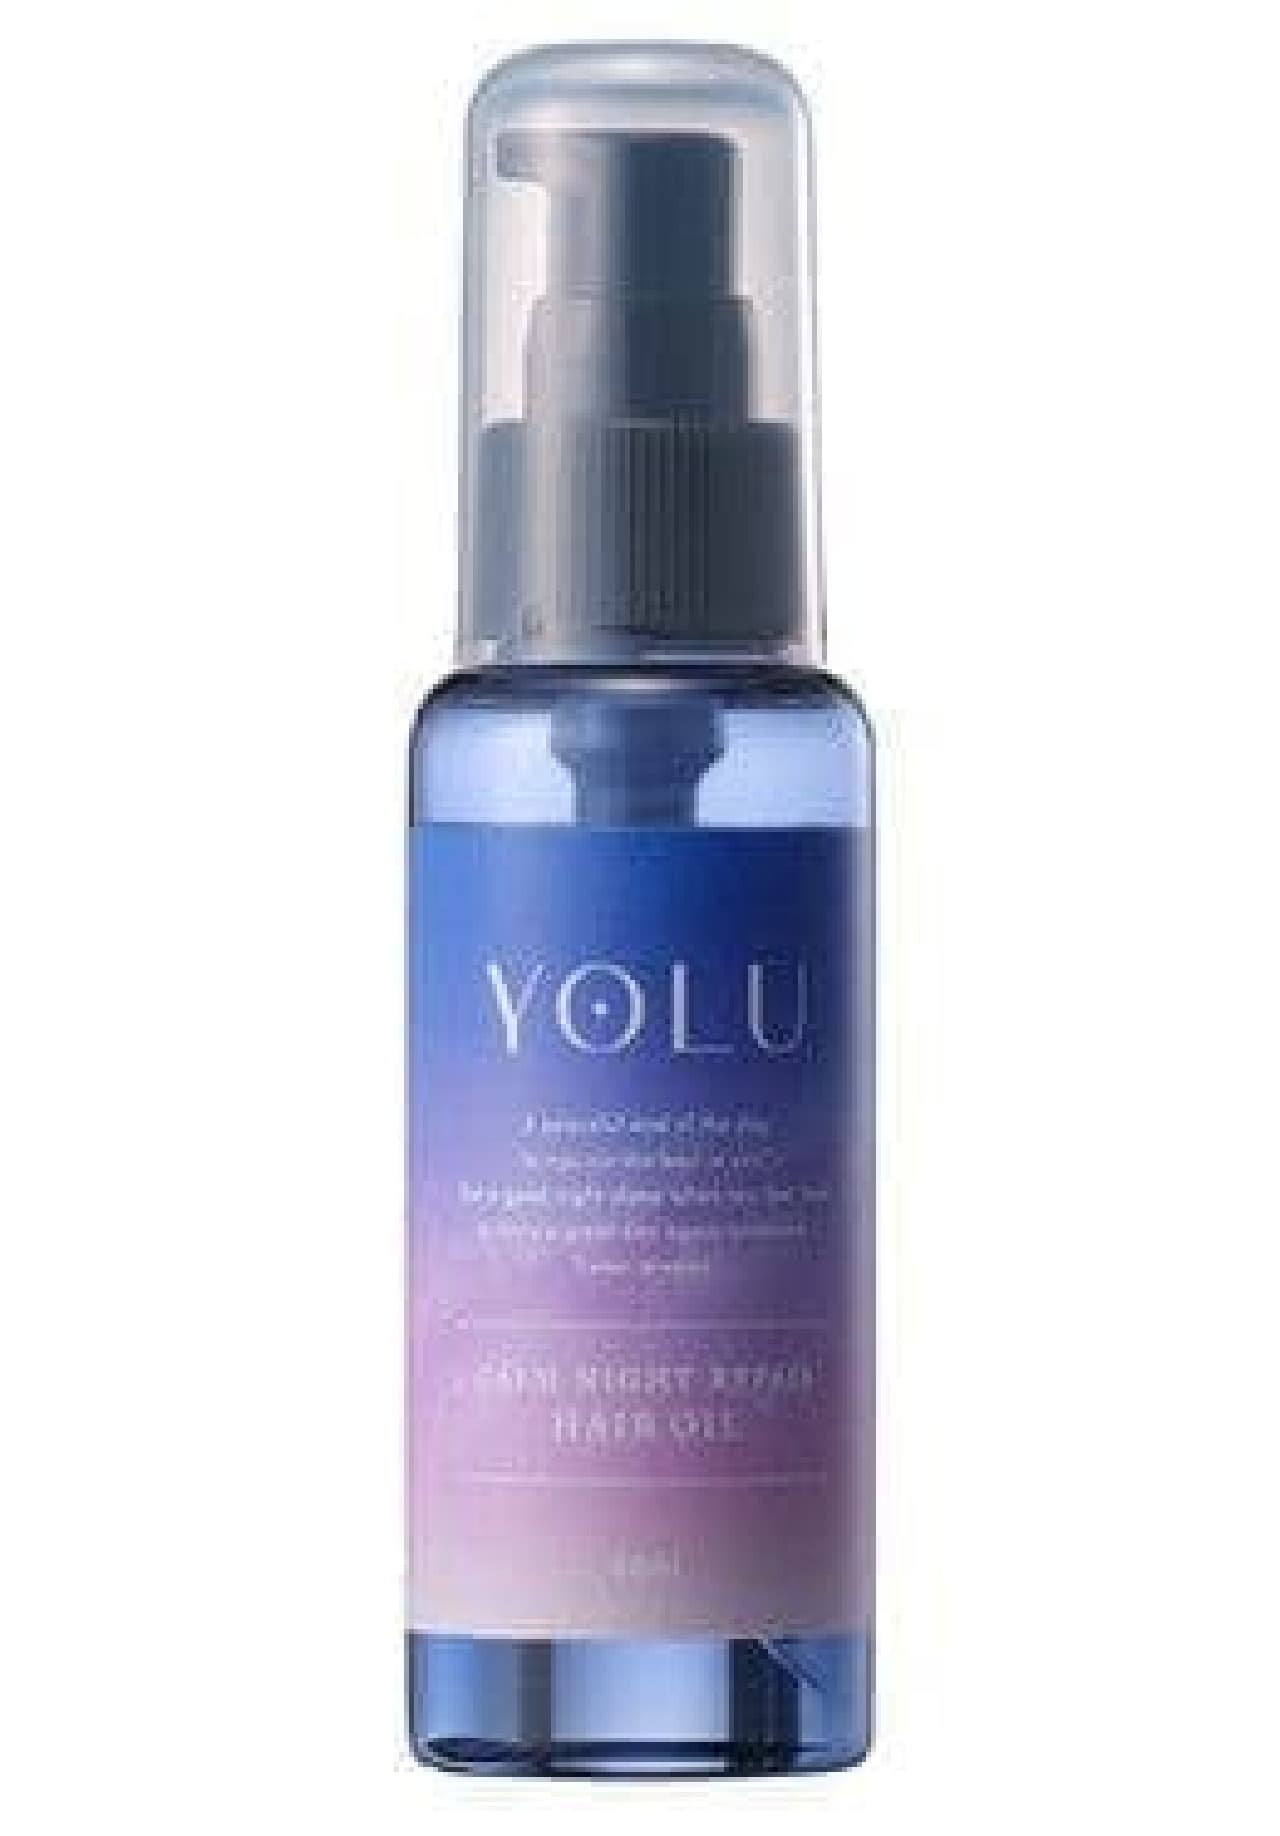 YOLU "Calm Night Repair Hair Oil"